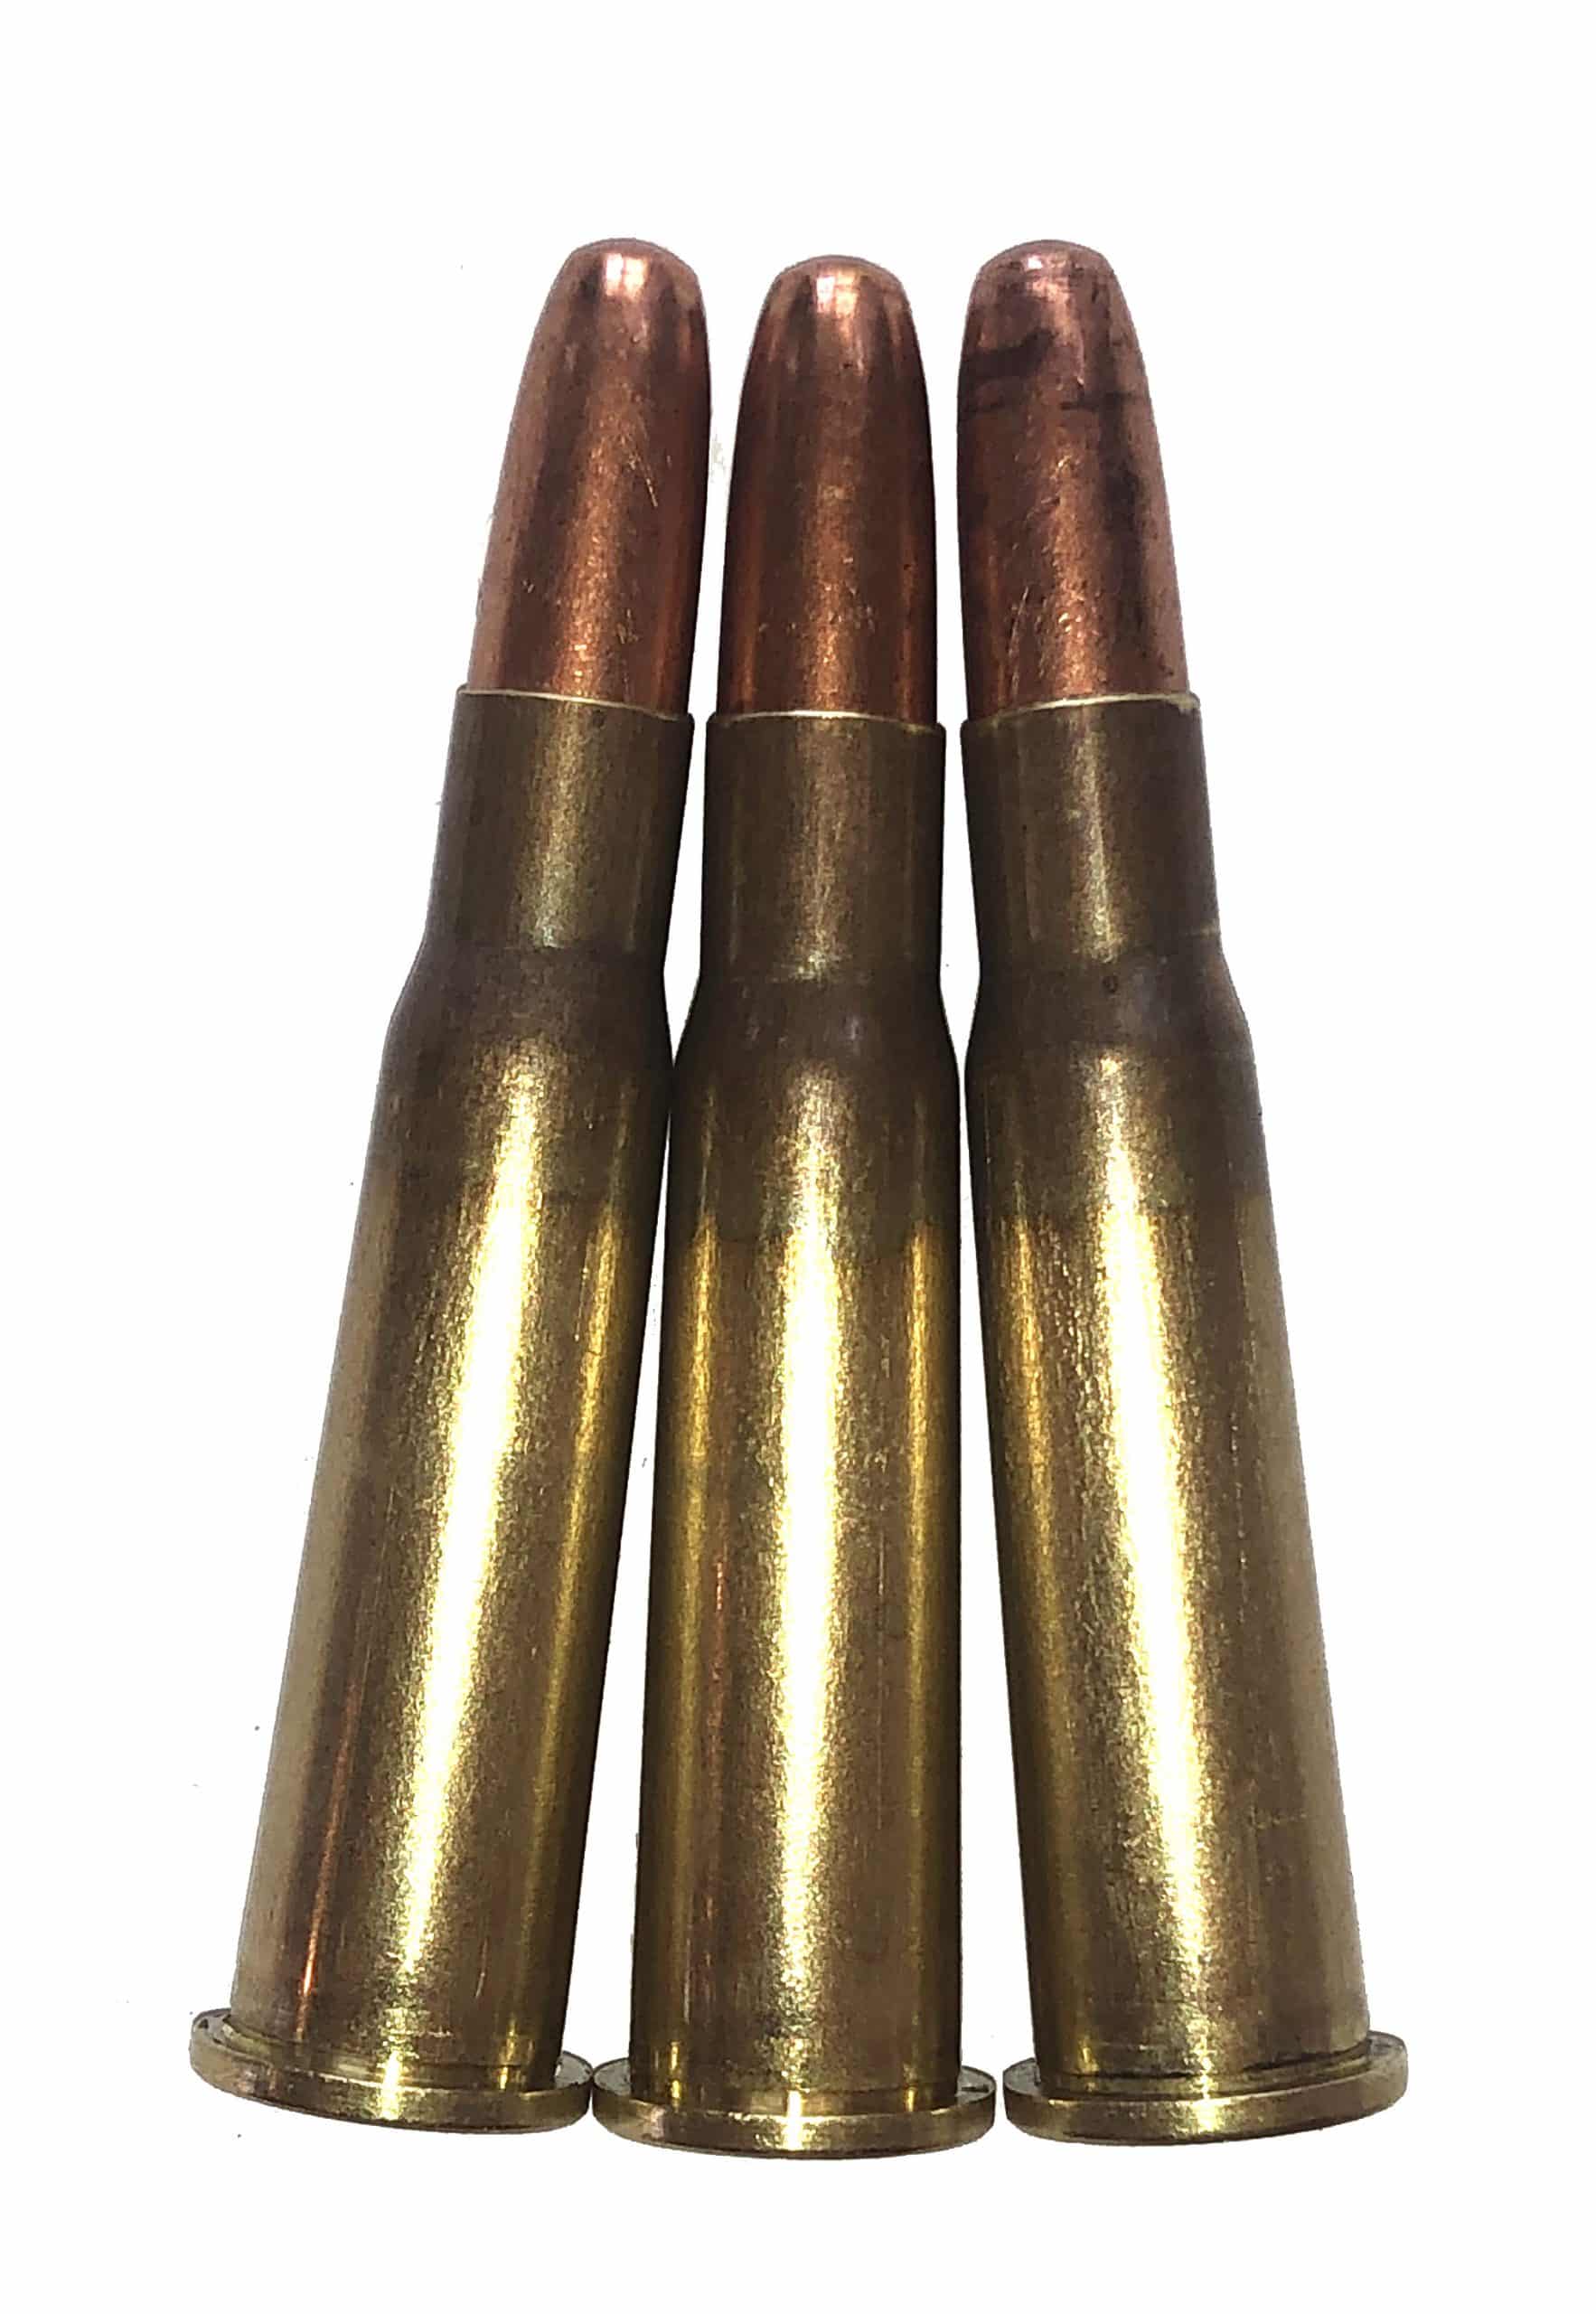 33 Winchester reloading brass